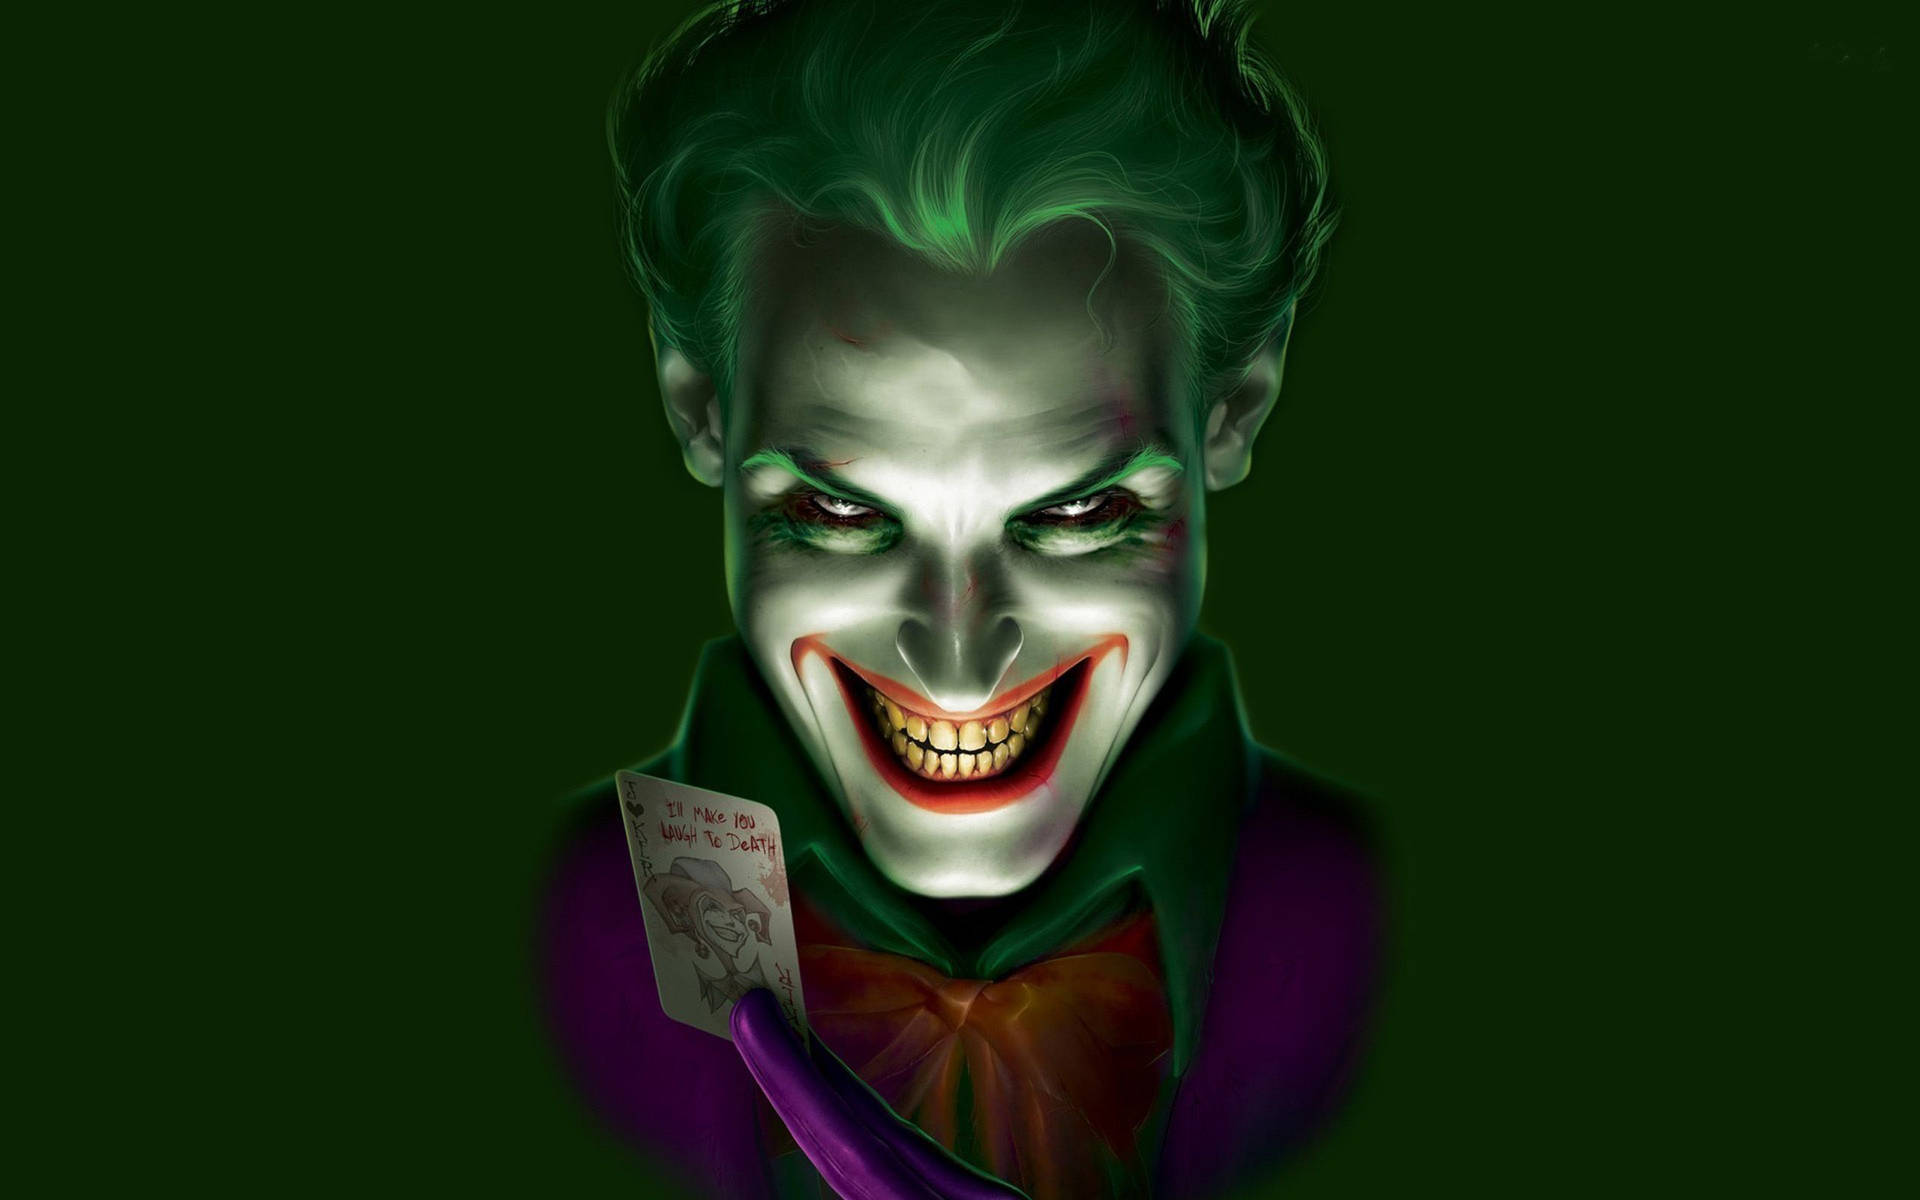 Smiling Joker With Green Hair Wallpaper